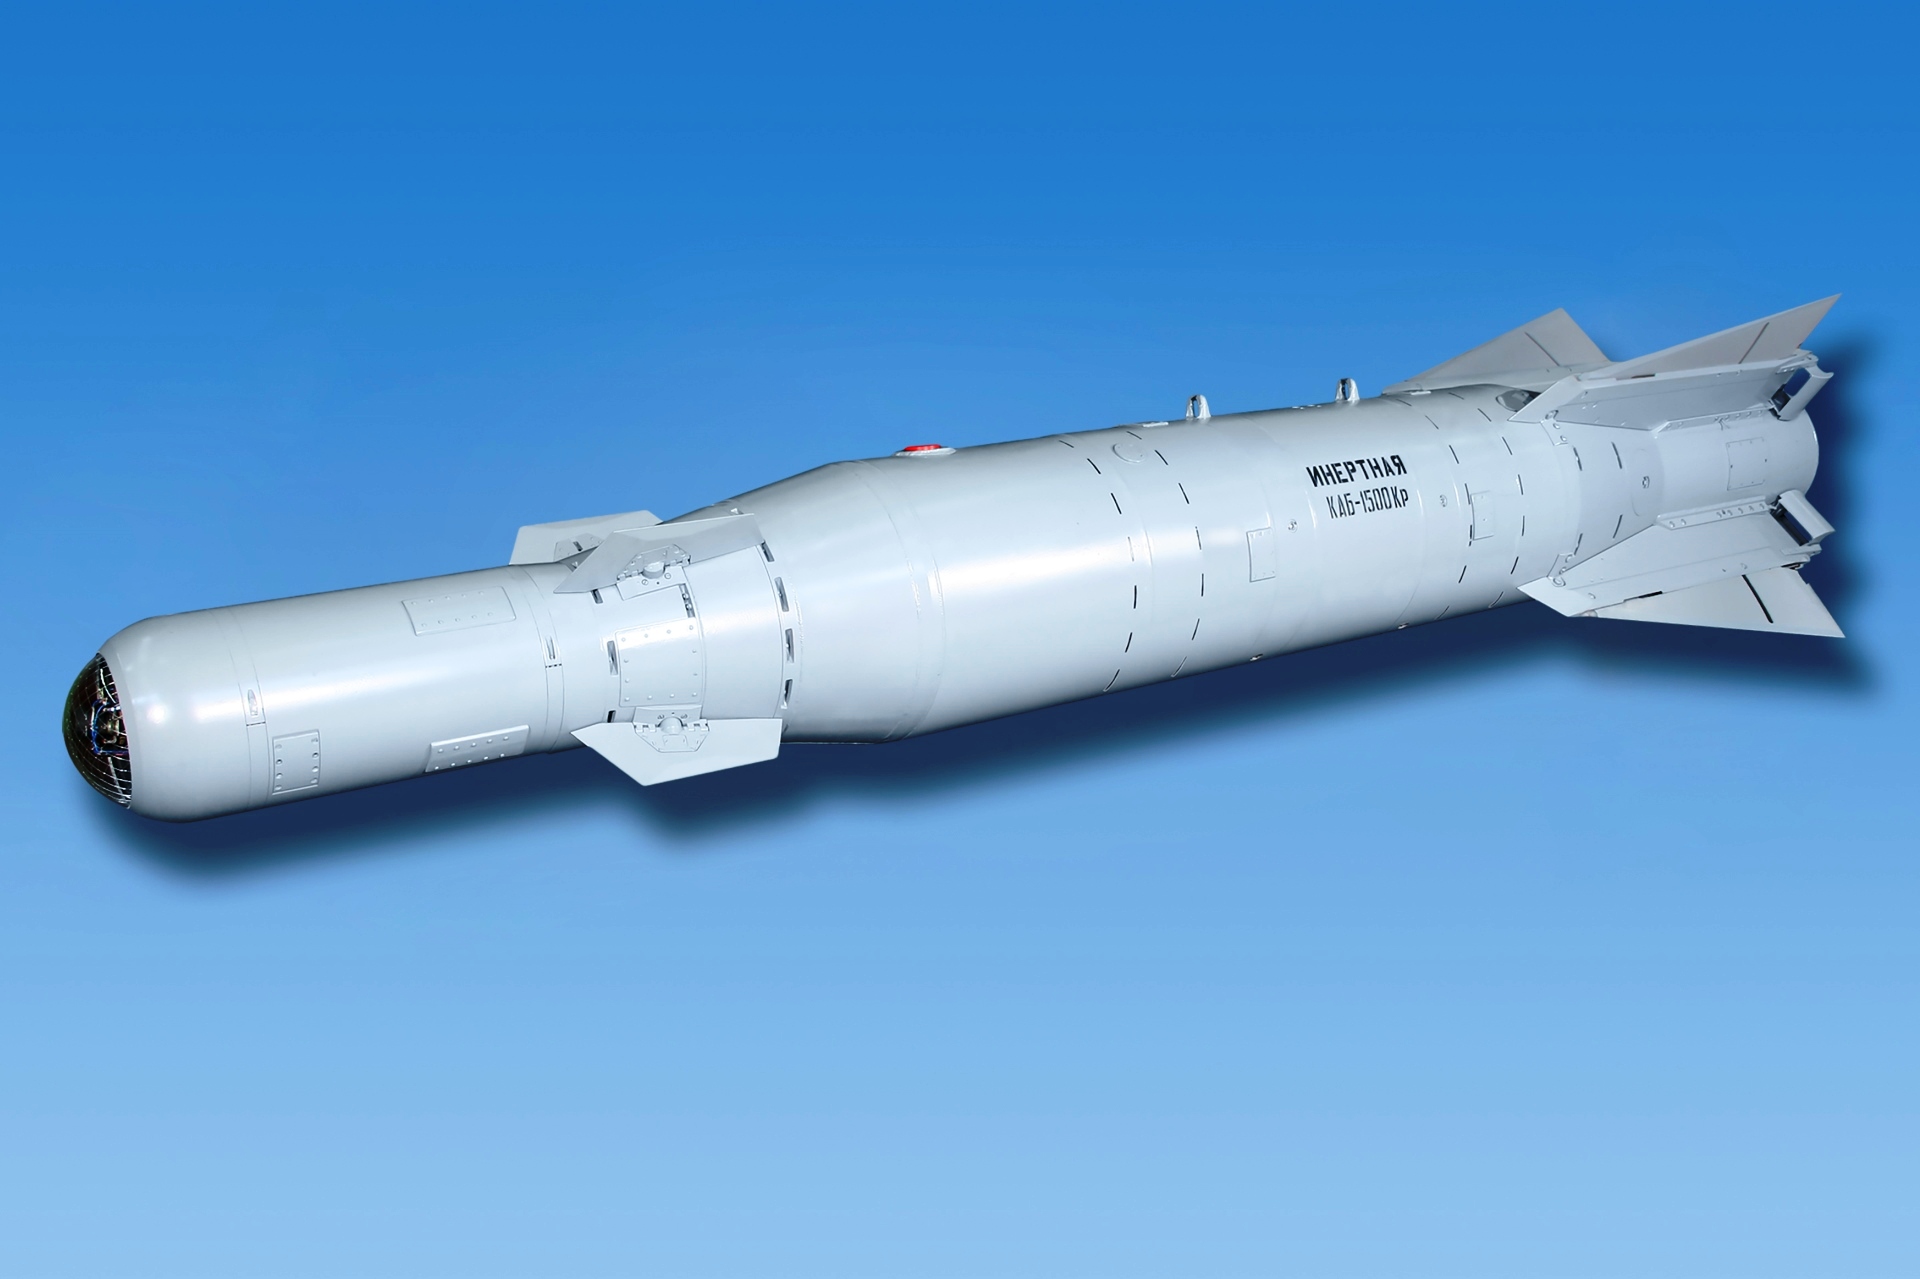 Авиабомба каб. Корректируемая Авиационная бомба каб-1500лг. Управляемая Авиационная бомба каб-1500. Каб-1500кр(ЛГ);. УПАБ-1500б.